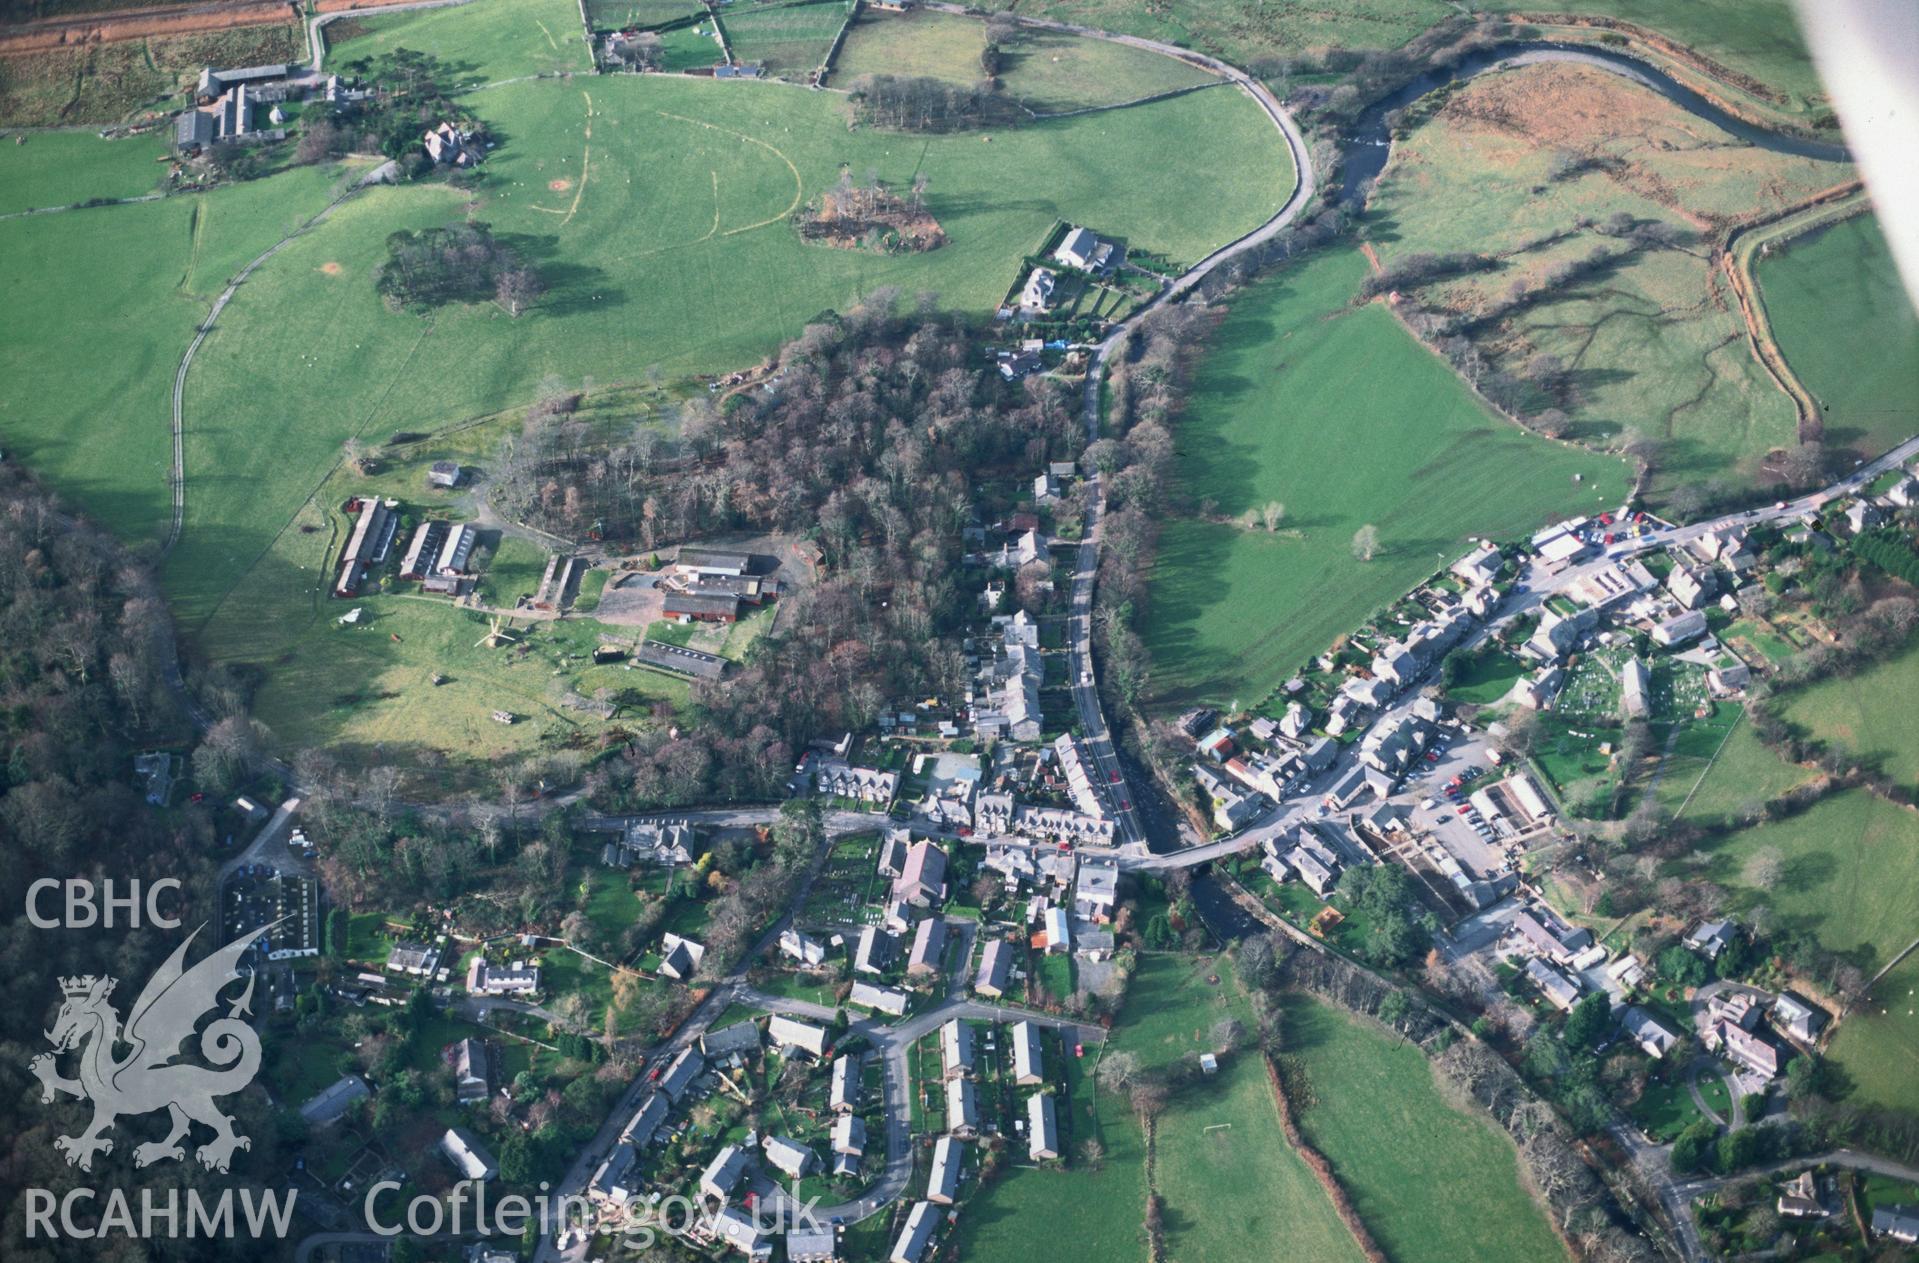 Slide of RCAHMW colour oblique aerial photograph of Llanbedr, taken by T.G. Driver, 14/2/2002.